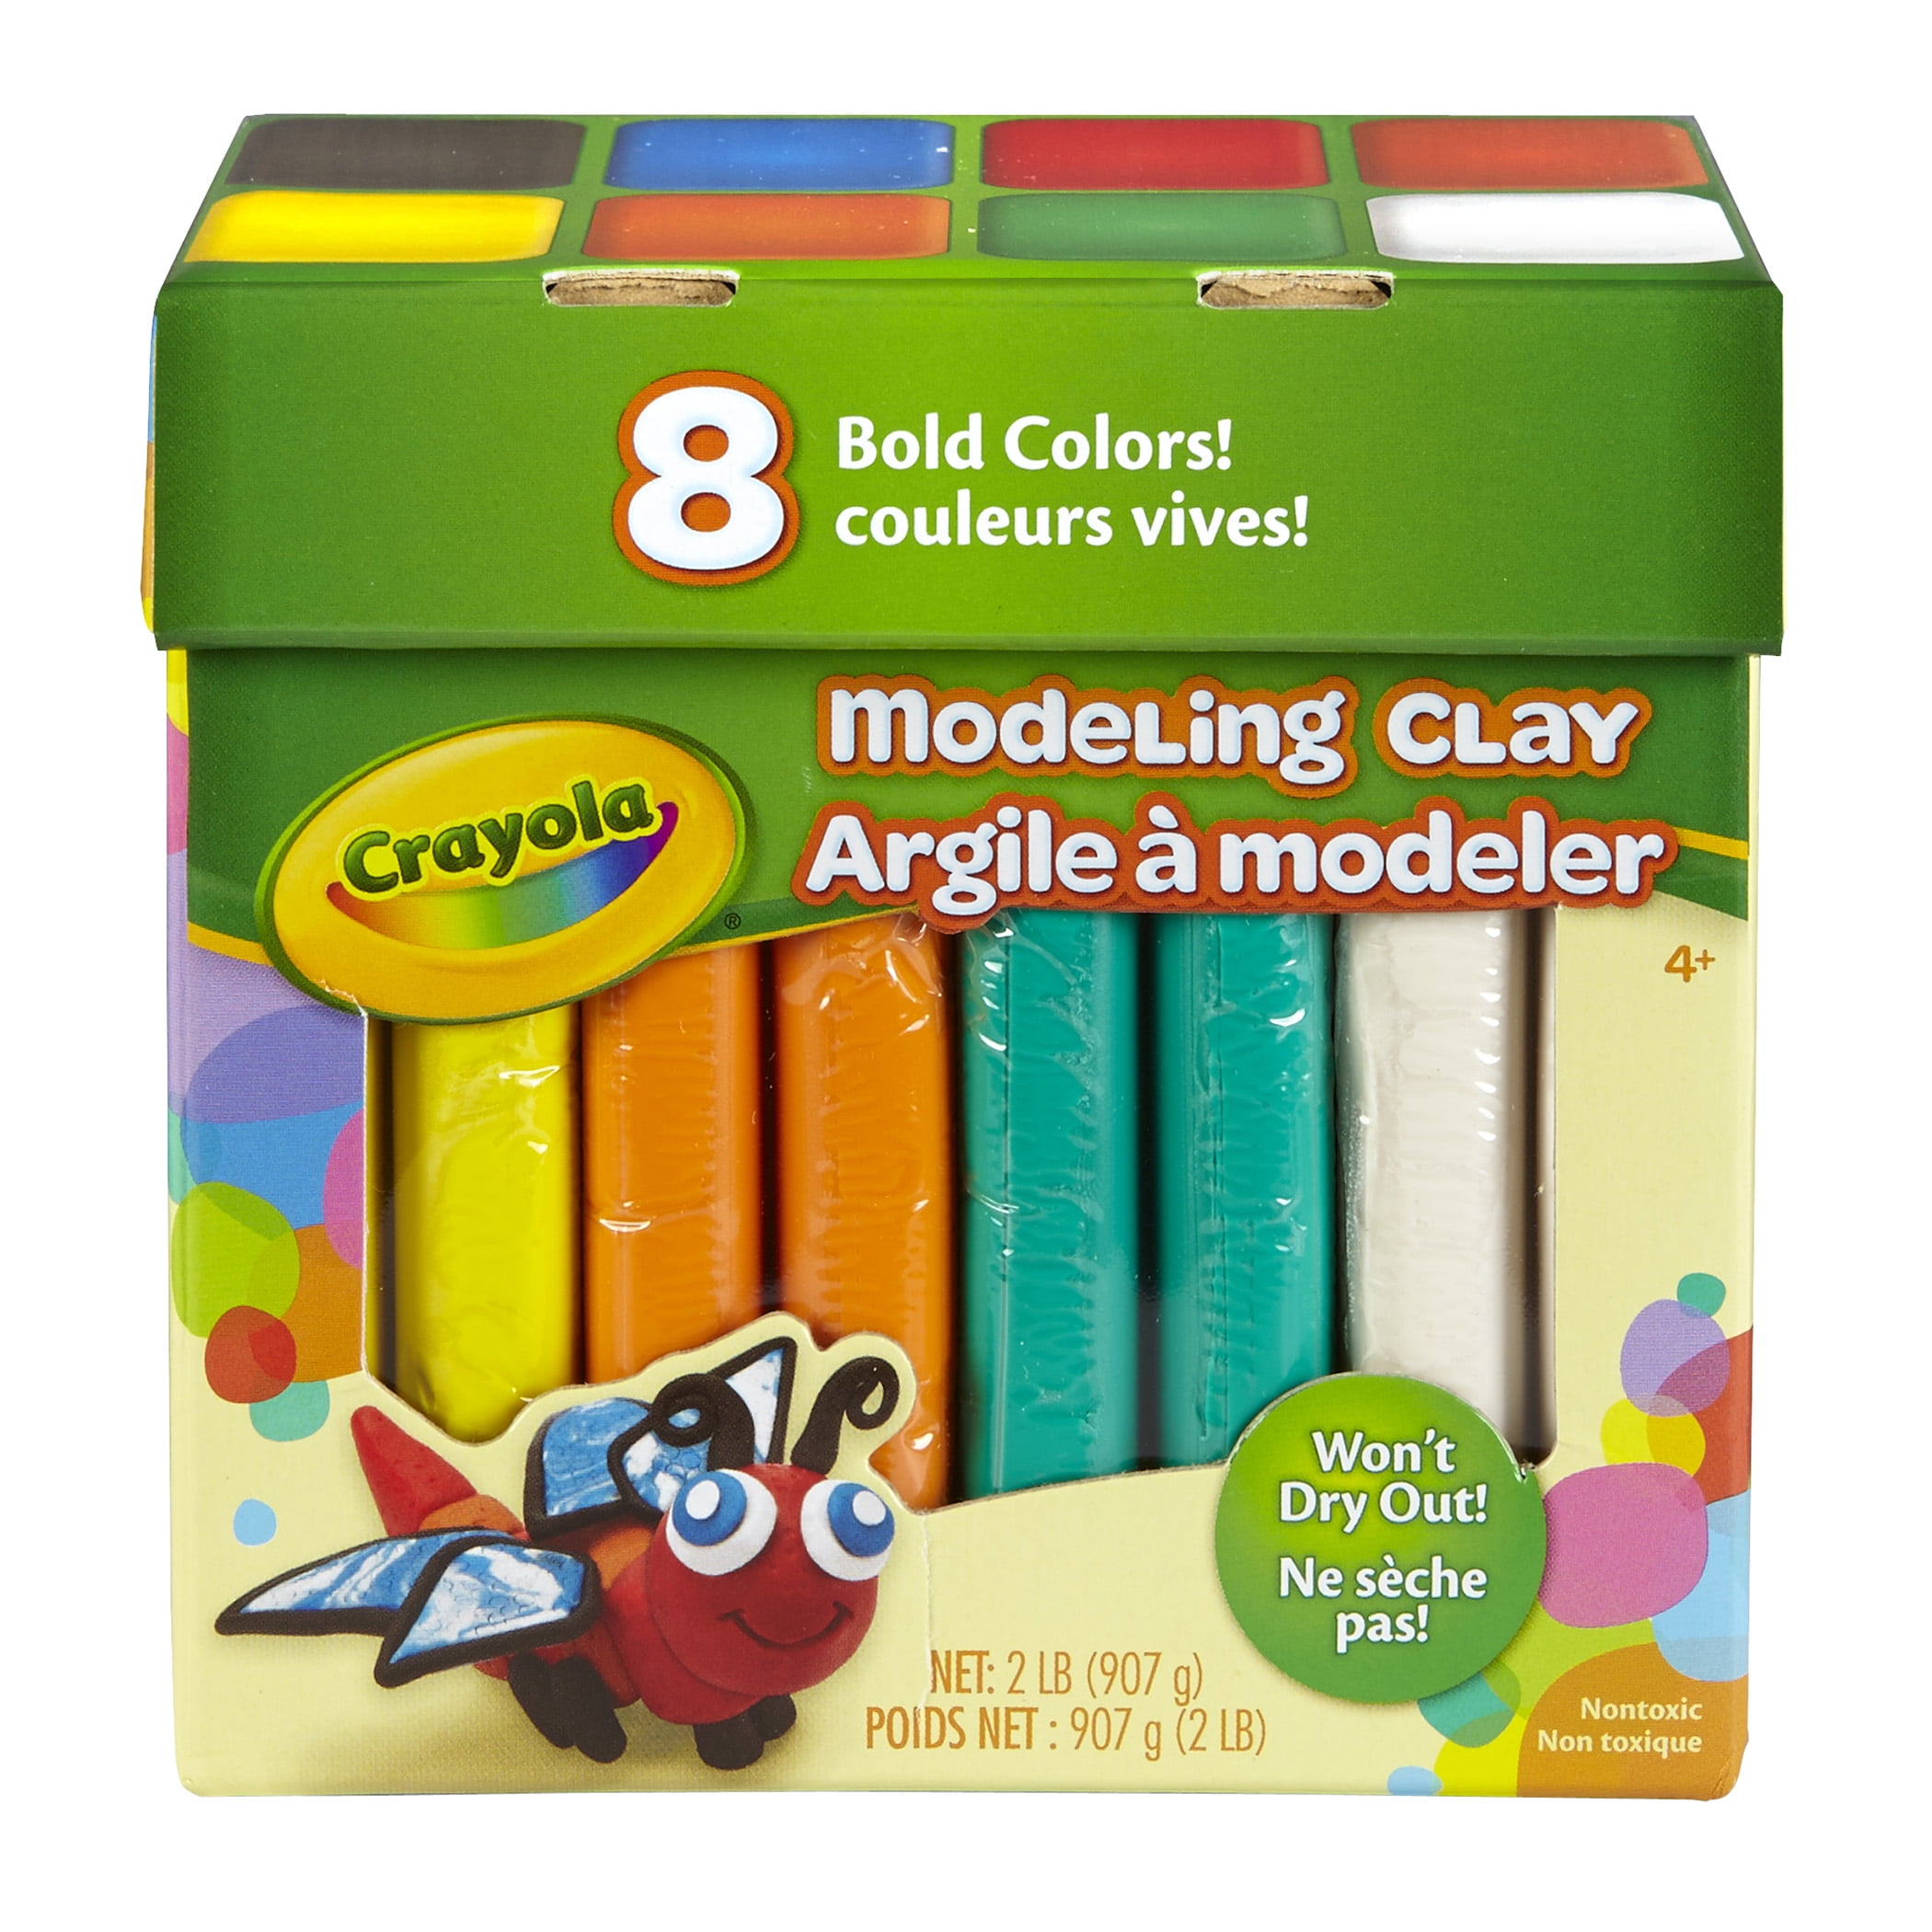 Crayola Neon Modeling Clay